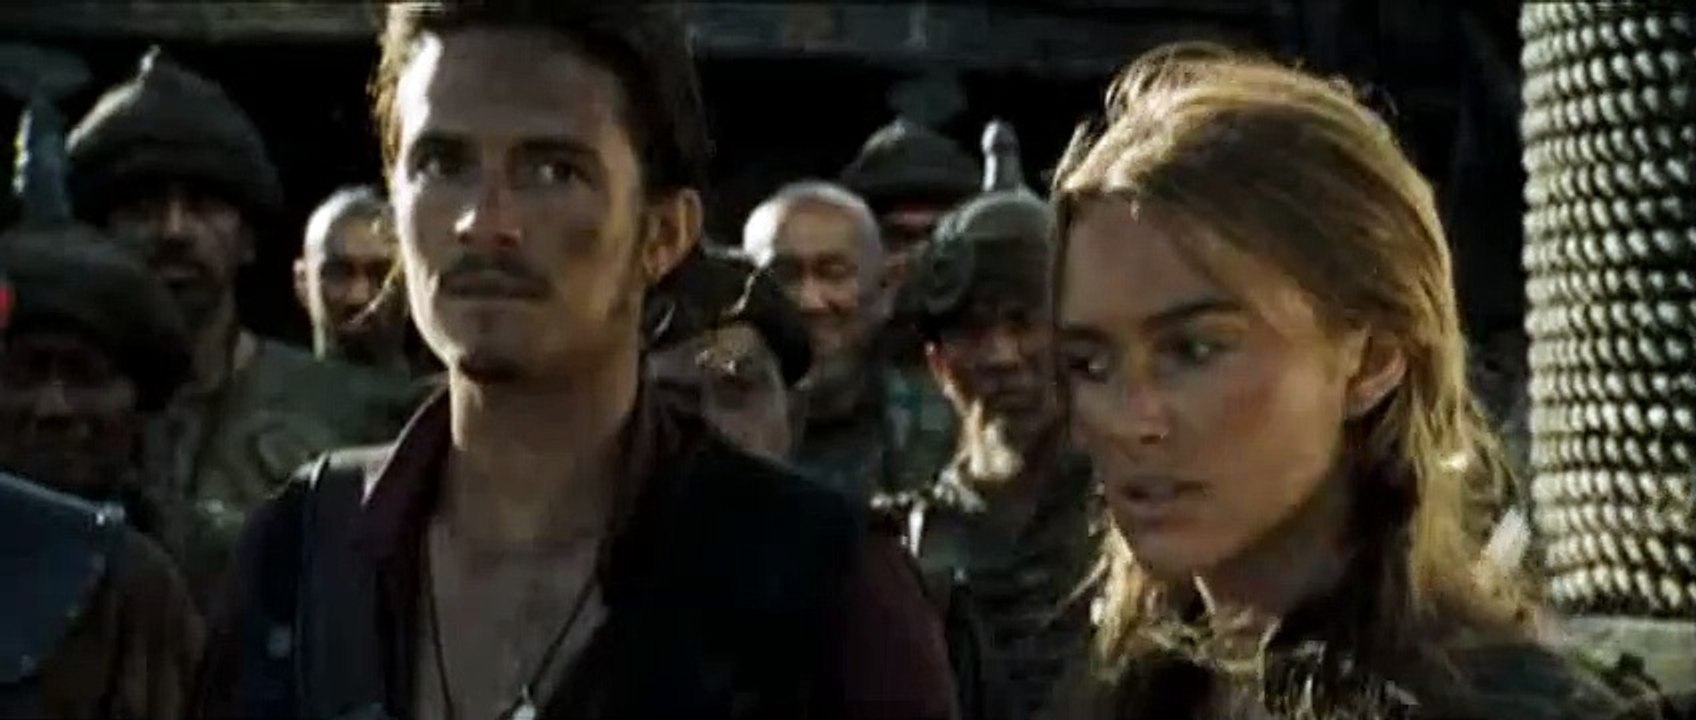 Pirates Of The Caribbean - Am Ende der Welt Trailer DF